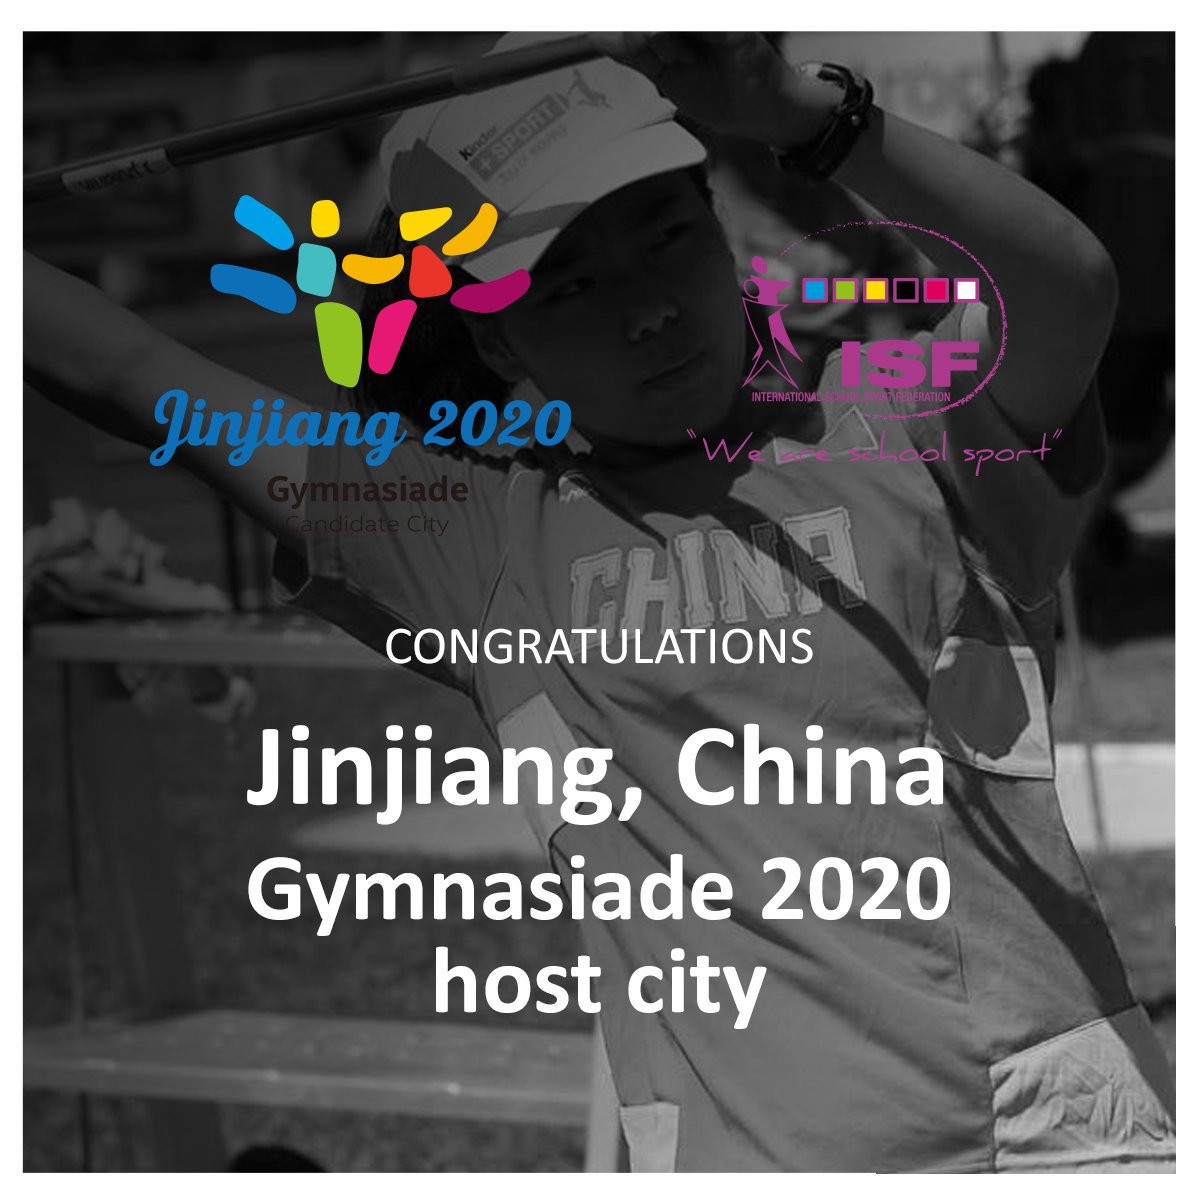 Heavyweight Jinjiang knocks-out Taoyuan and Budapest to gain ISF's 2020 Gymnasiade